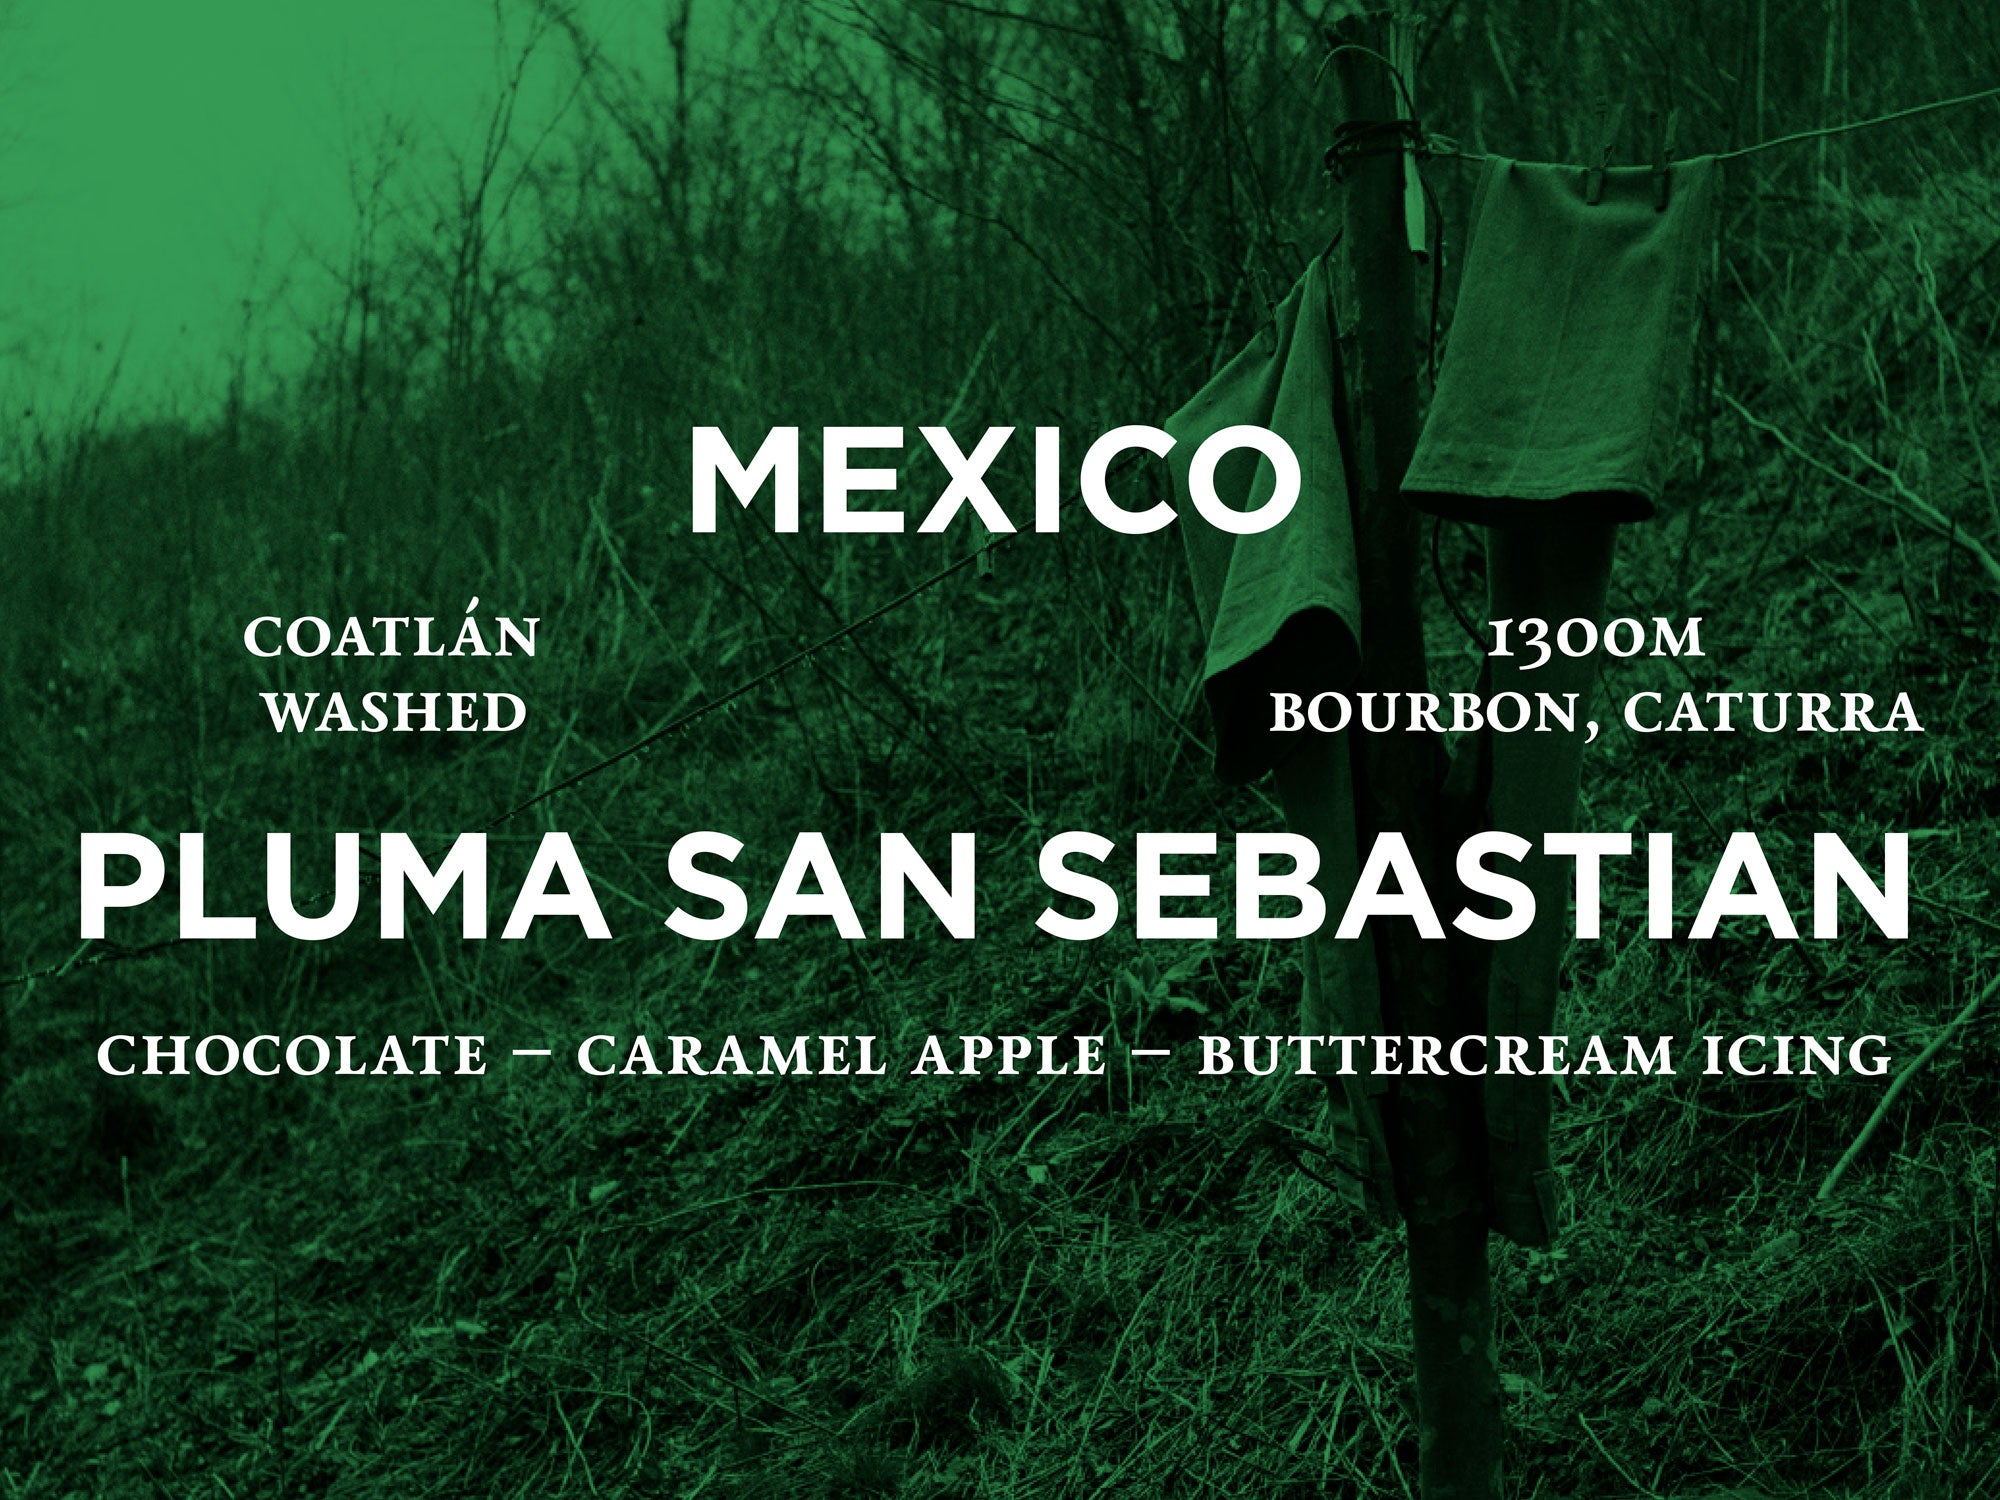 Mexico - Pluma San Sebastian